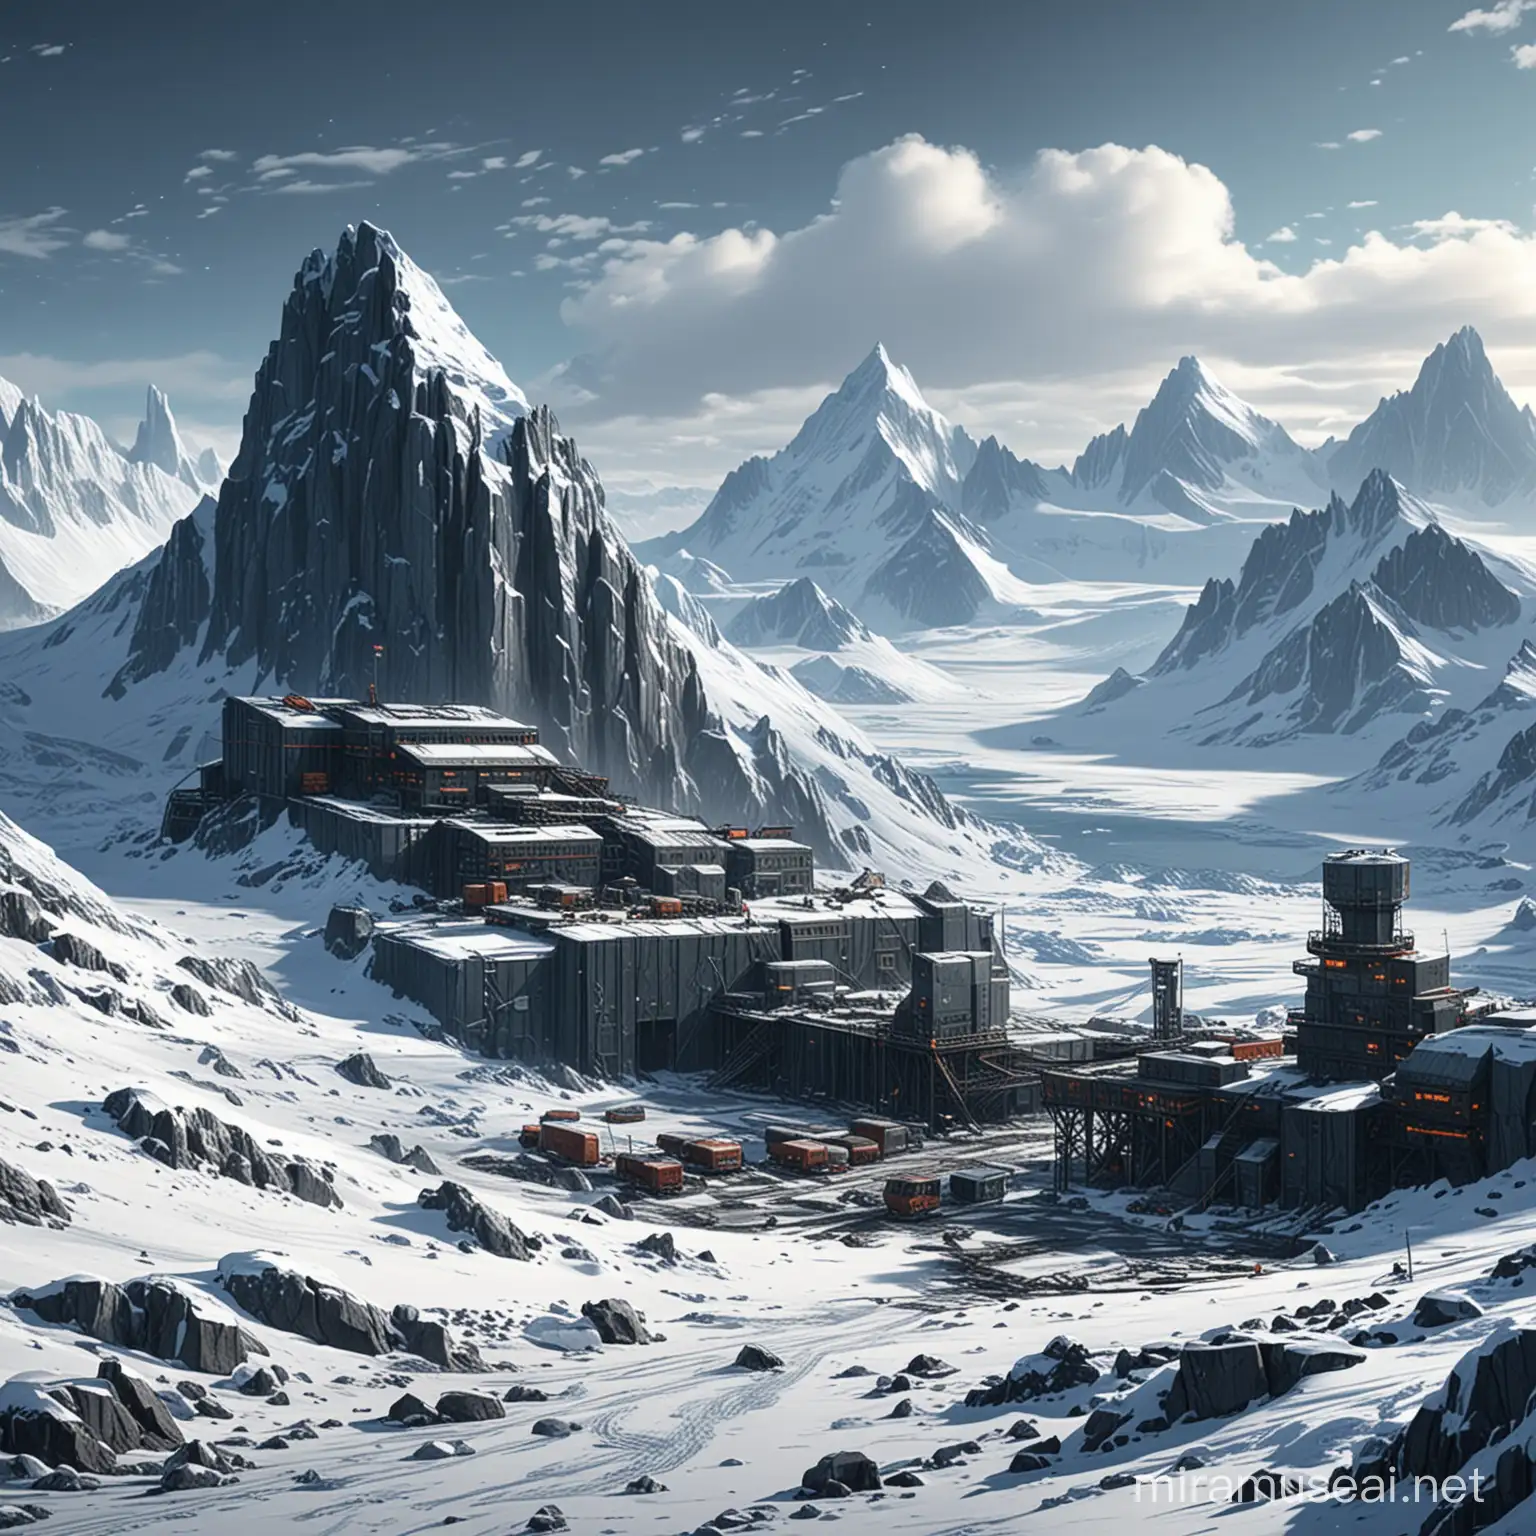 sci fi dystopia antarctic mountains mining station comics style